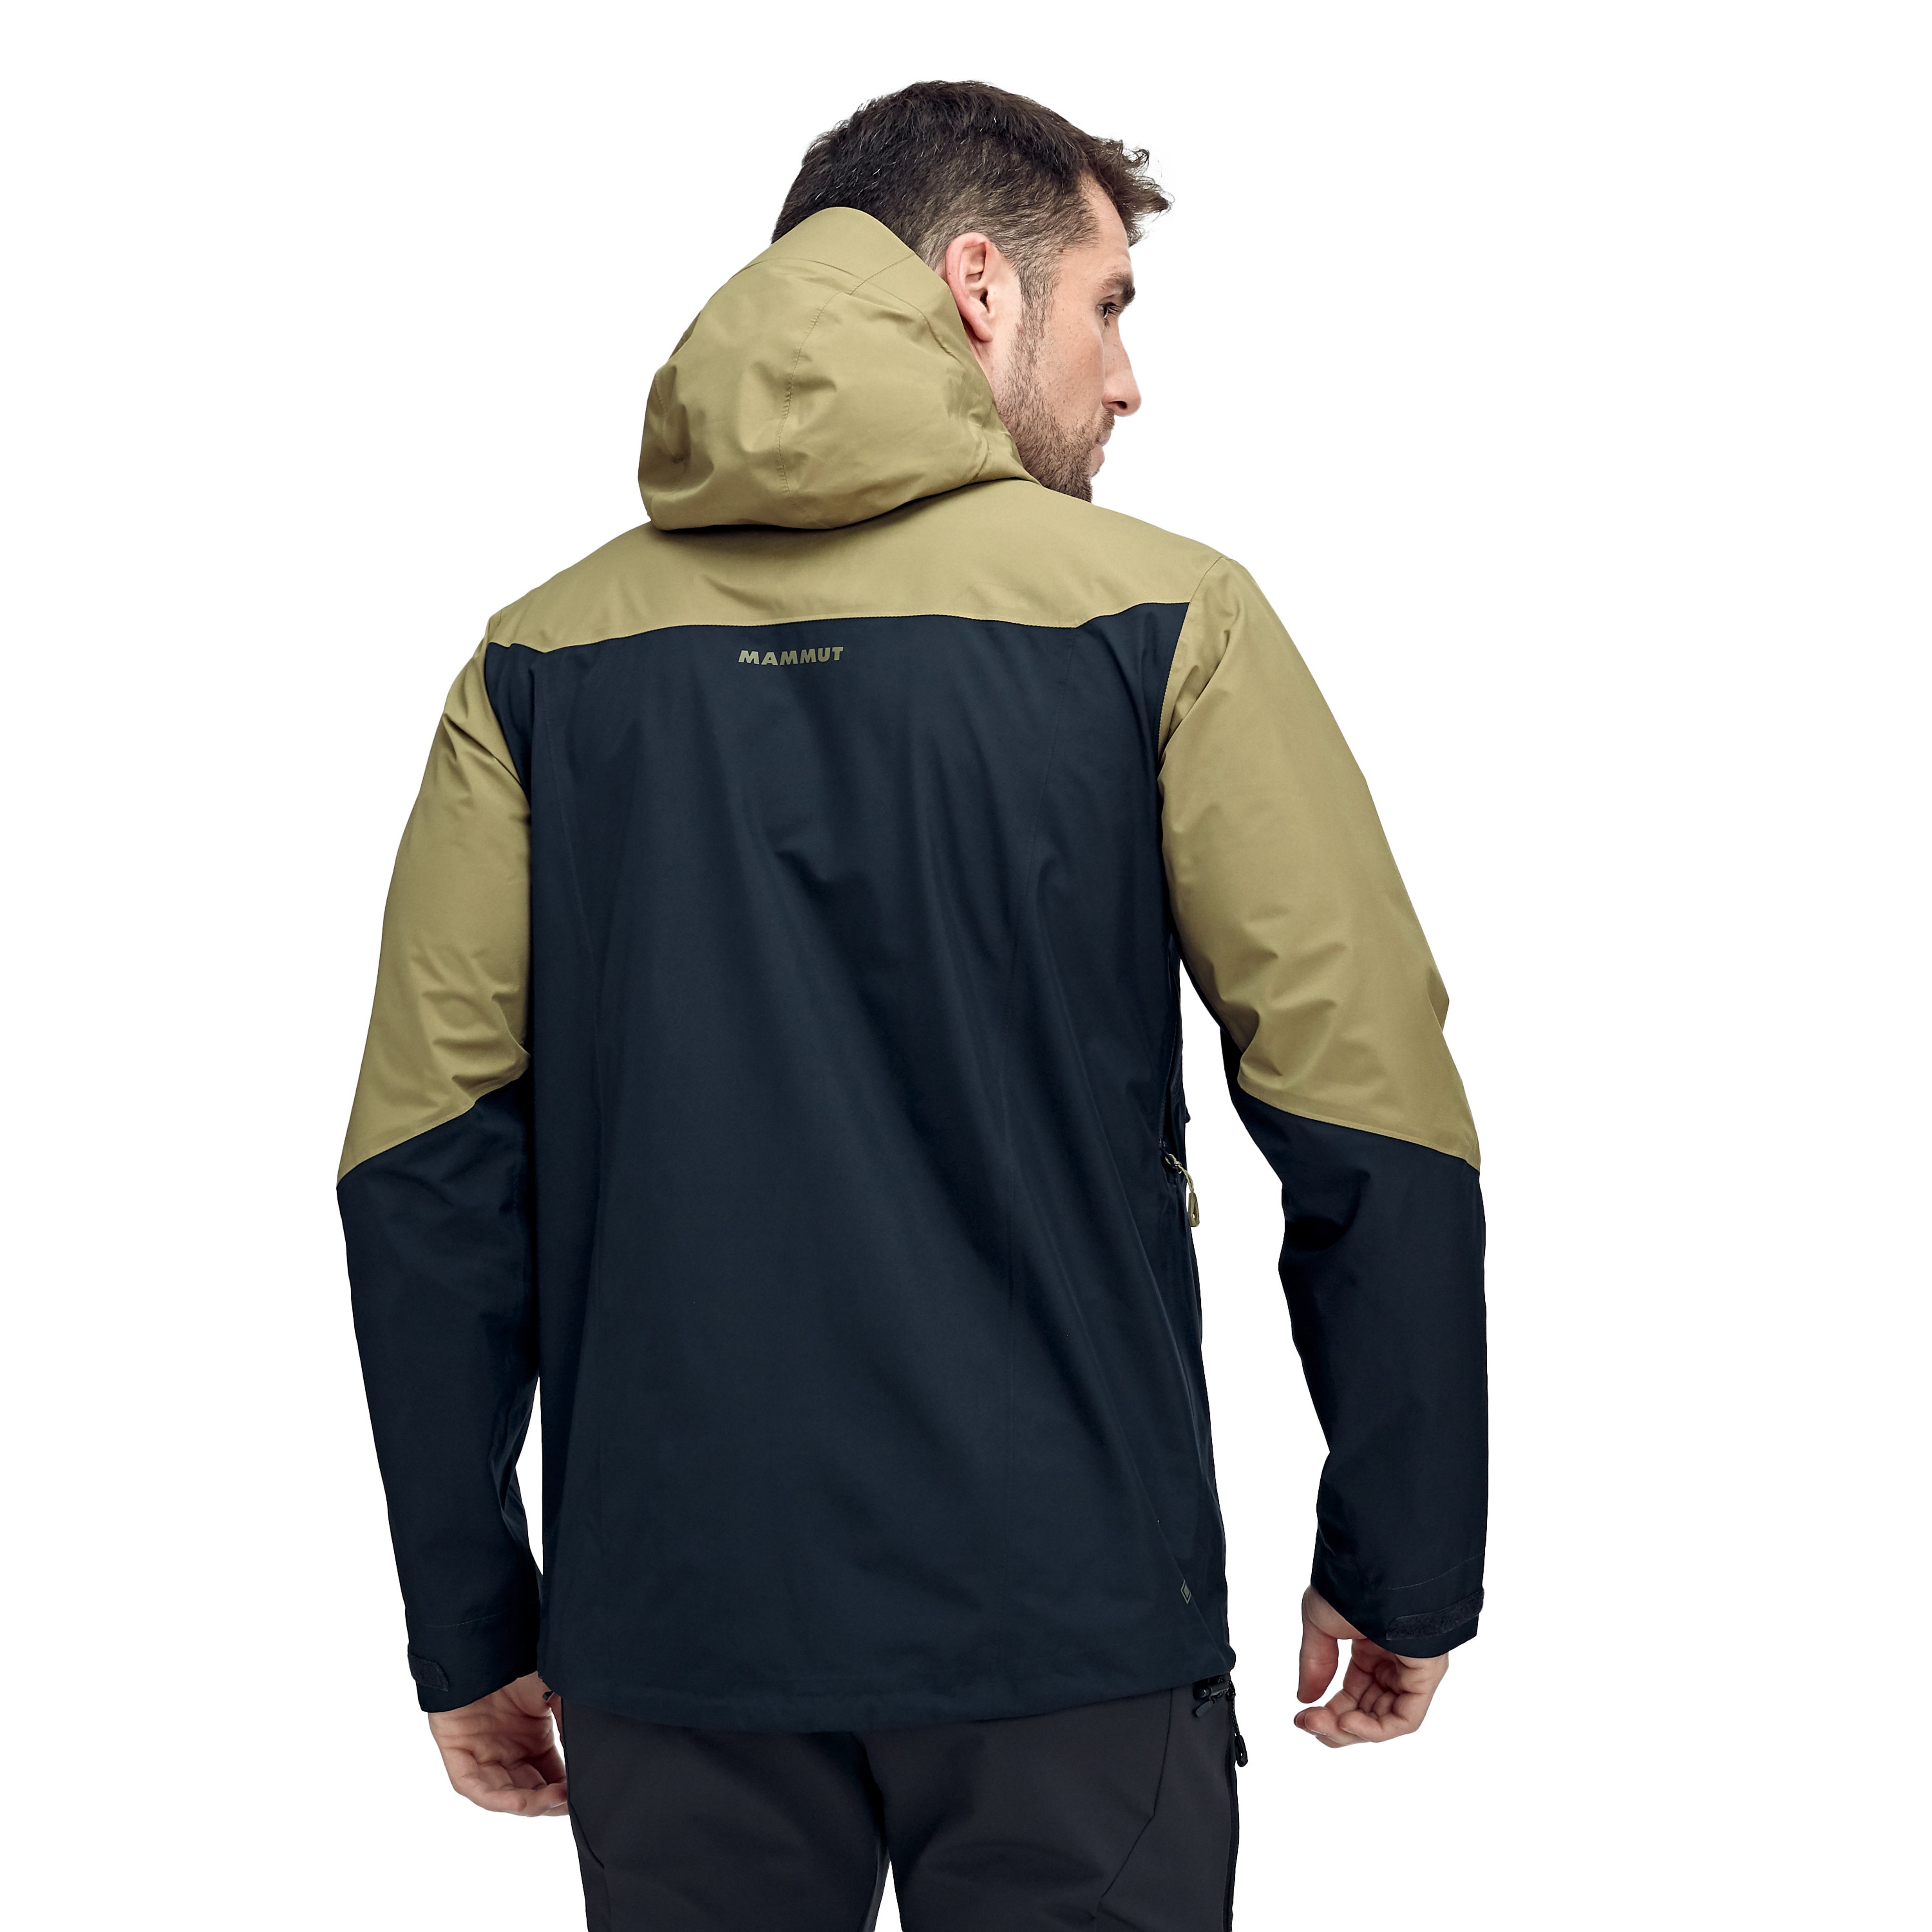 Convey Tour HS Hooded Jacket Men product image